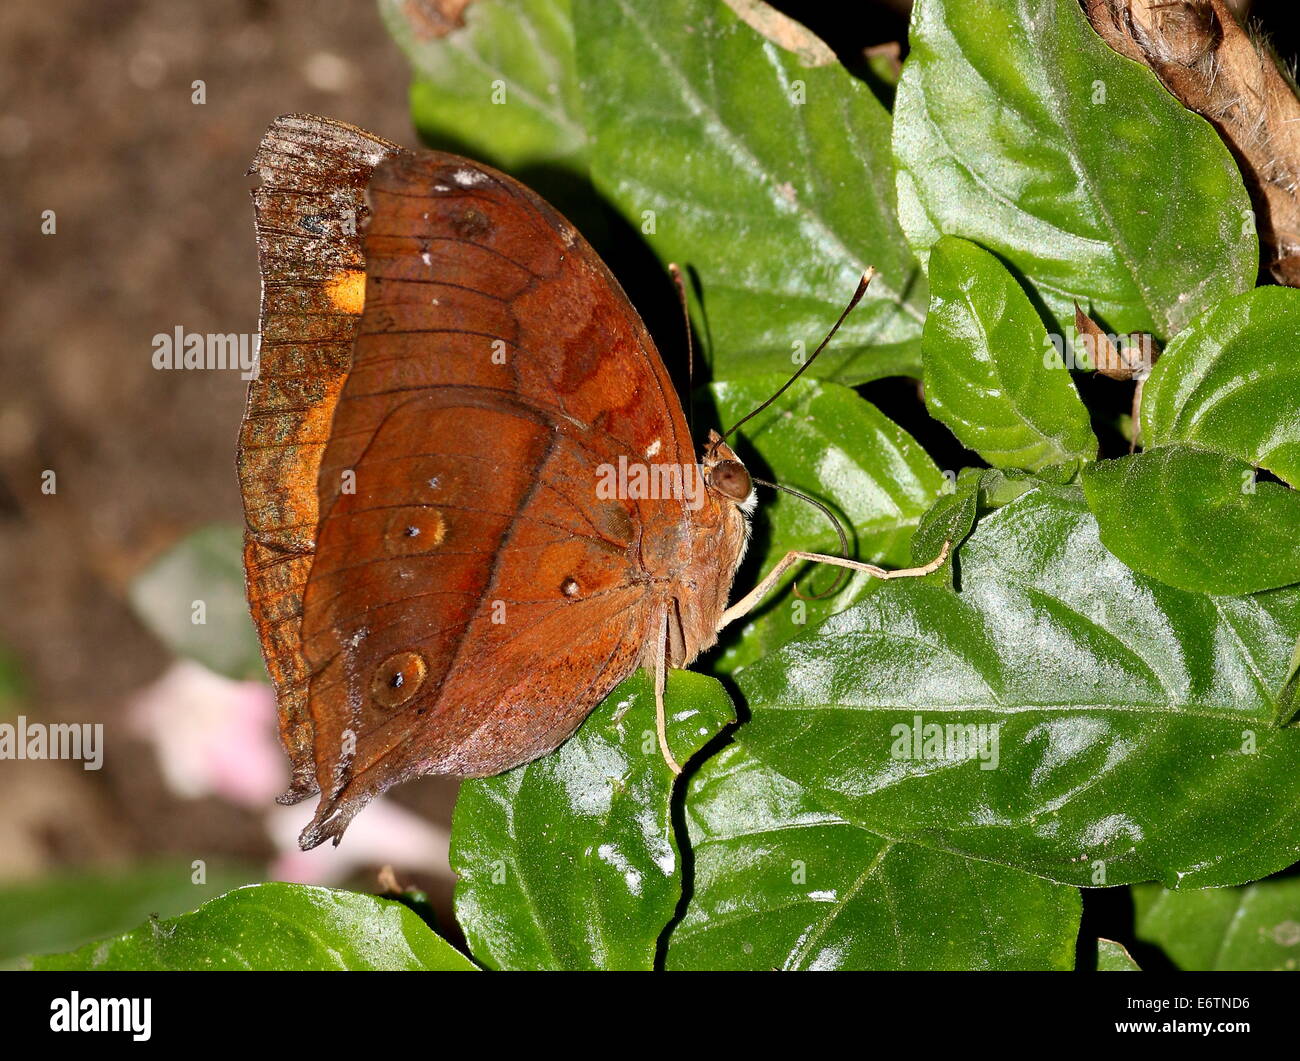 Hoja de Otoño asiático alias (Australia) Leafwing butterfly (Doleschallia bisaltide) Foto de stock